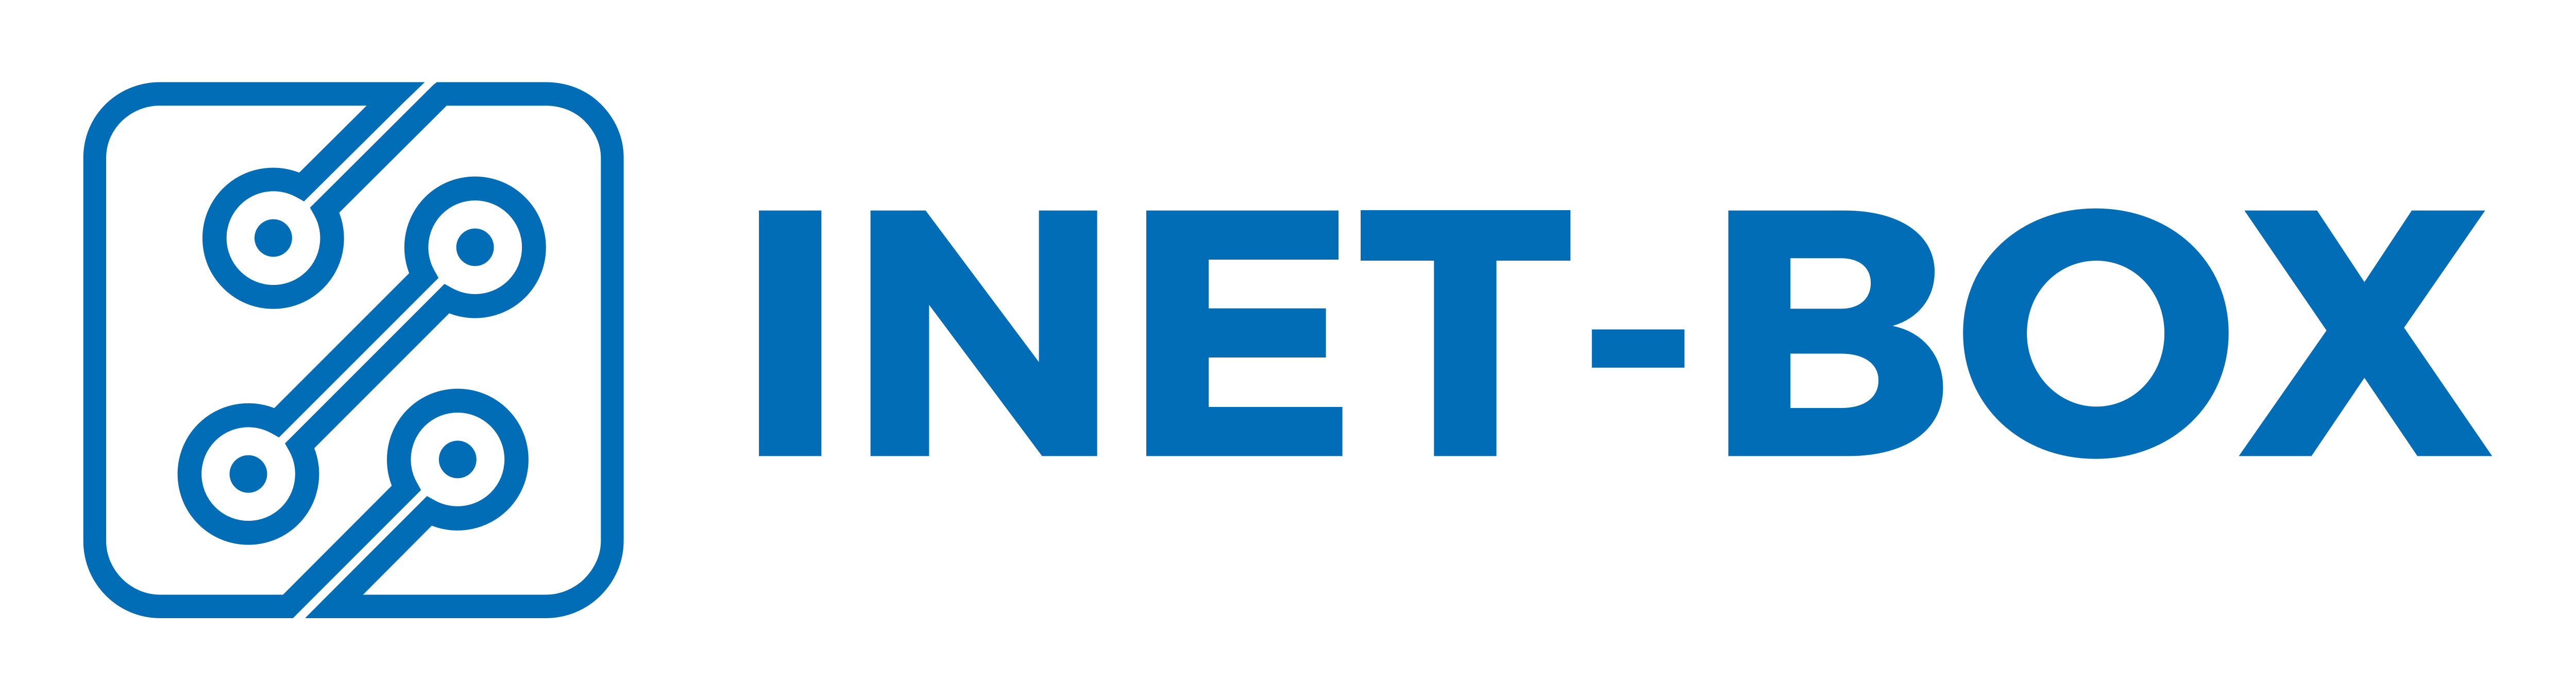 INET-BOX Logo